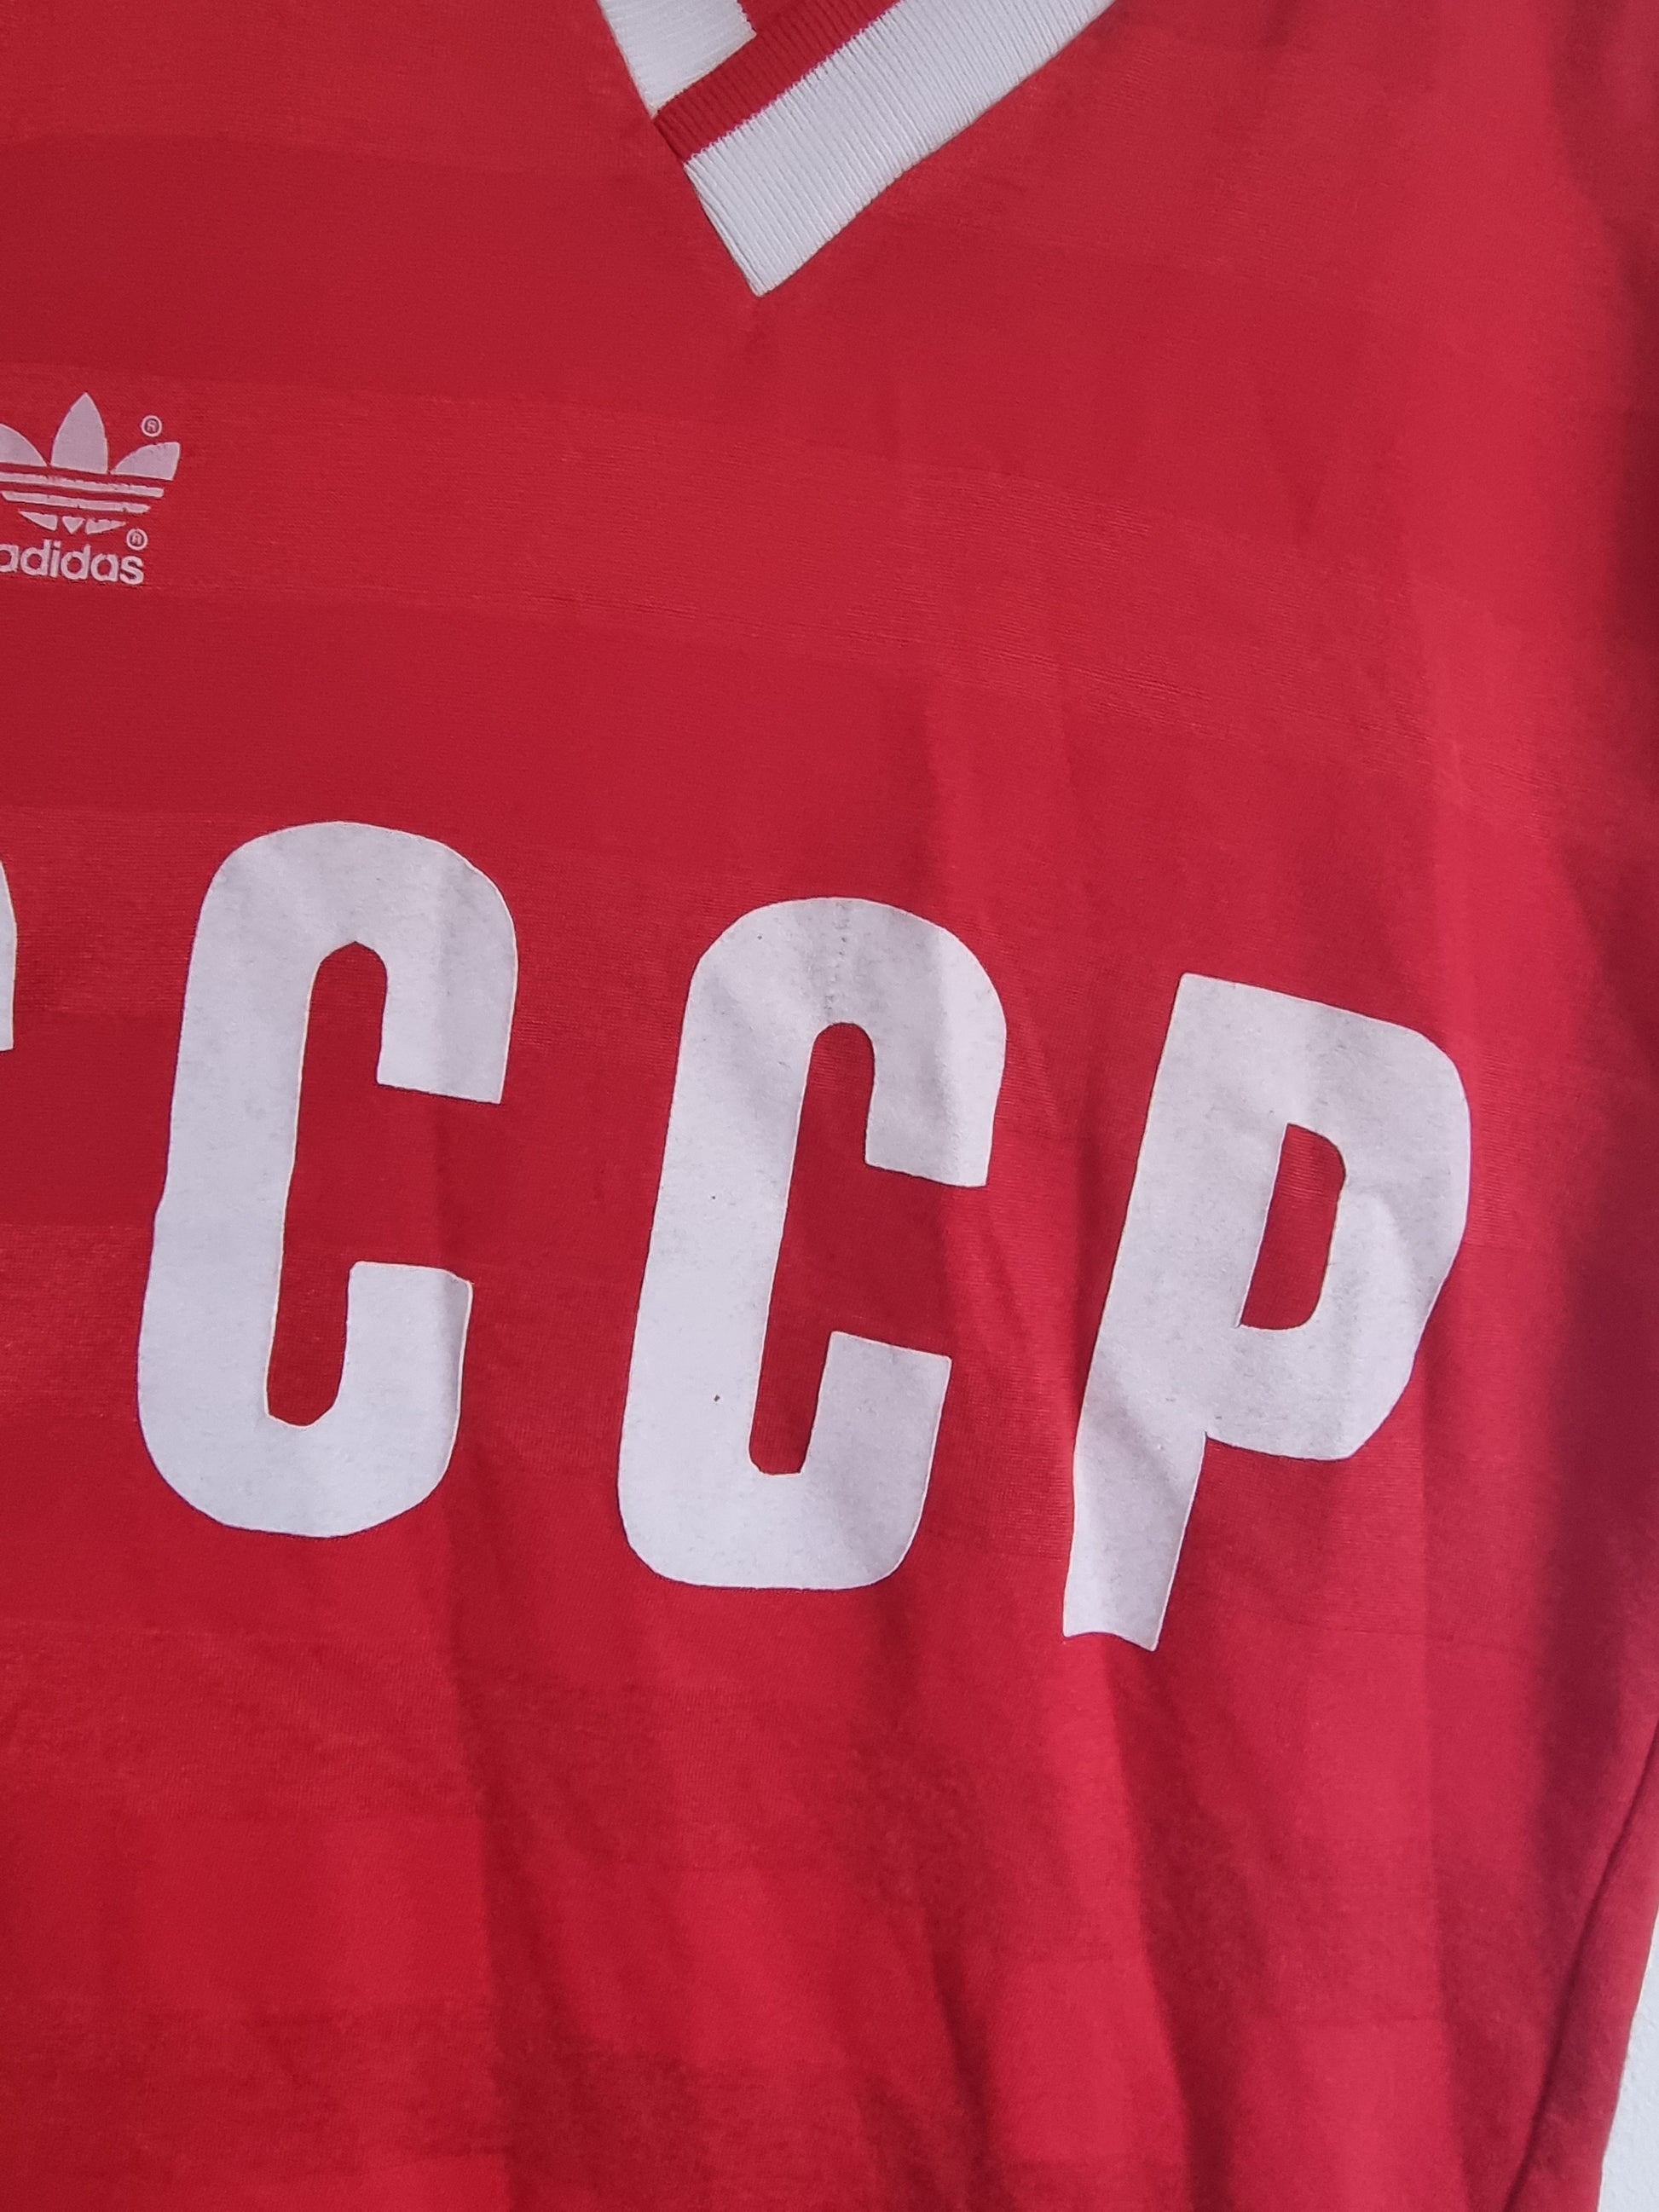 Adidas 1980s Soviet Union Away Retro Football Shirt - Football